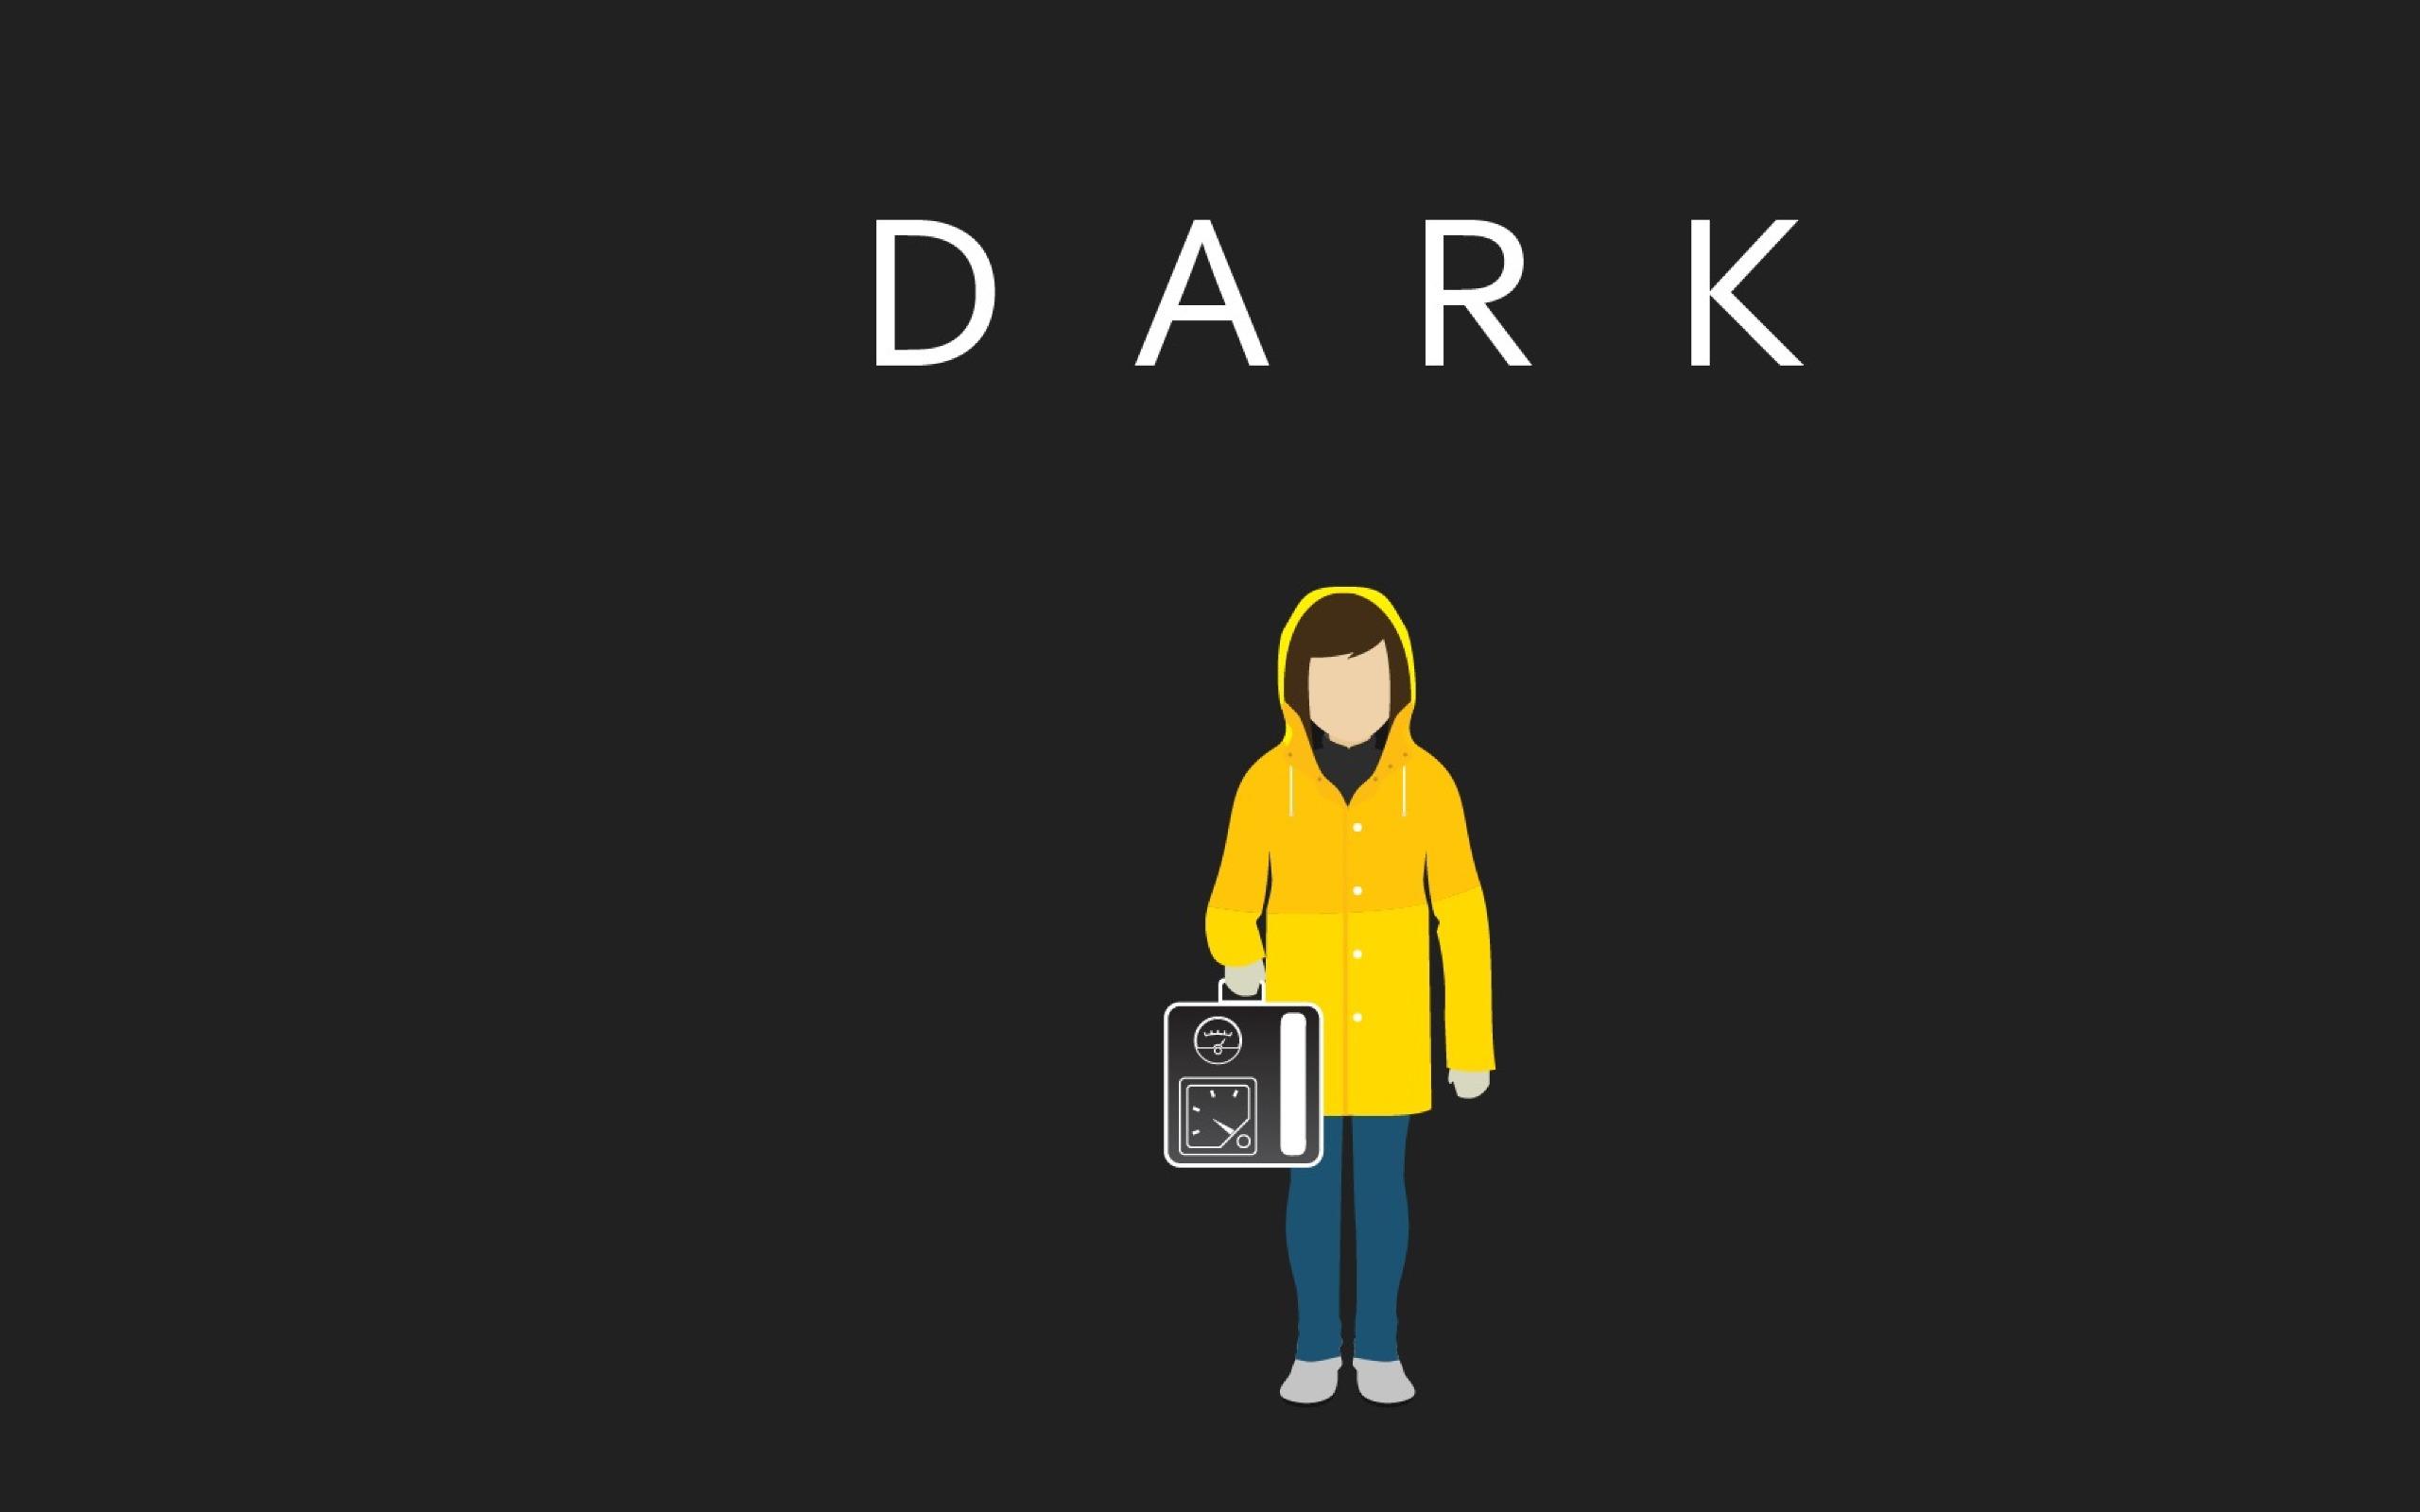 Dark Netflix Tv Show Minimal Poster, Full HD Wallpapers